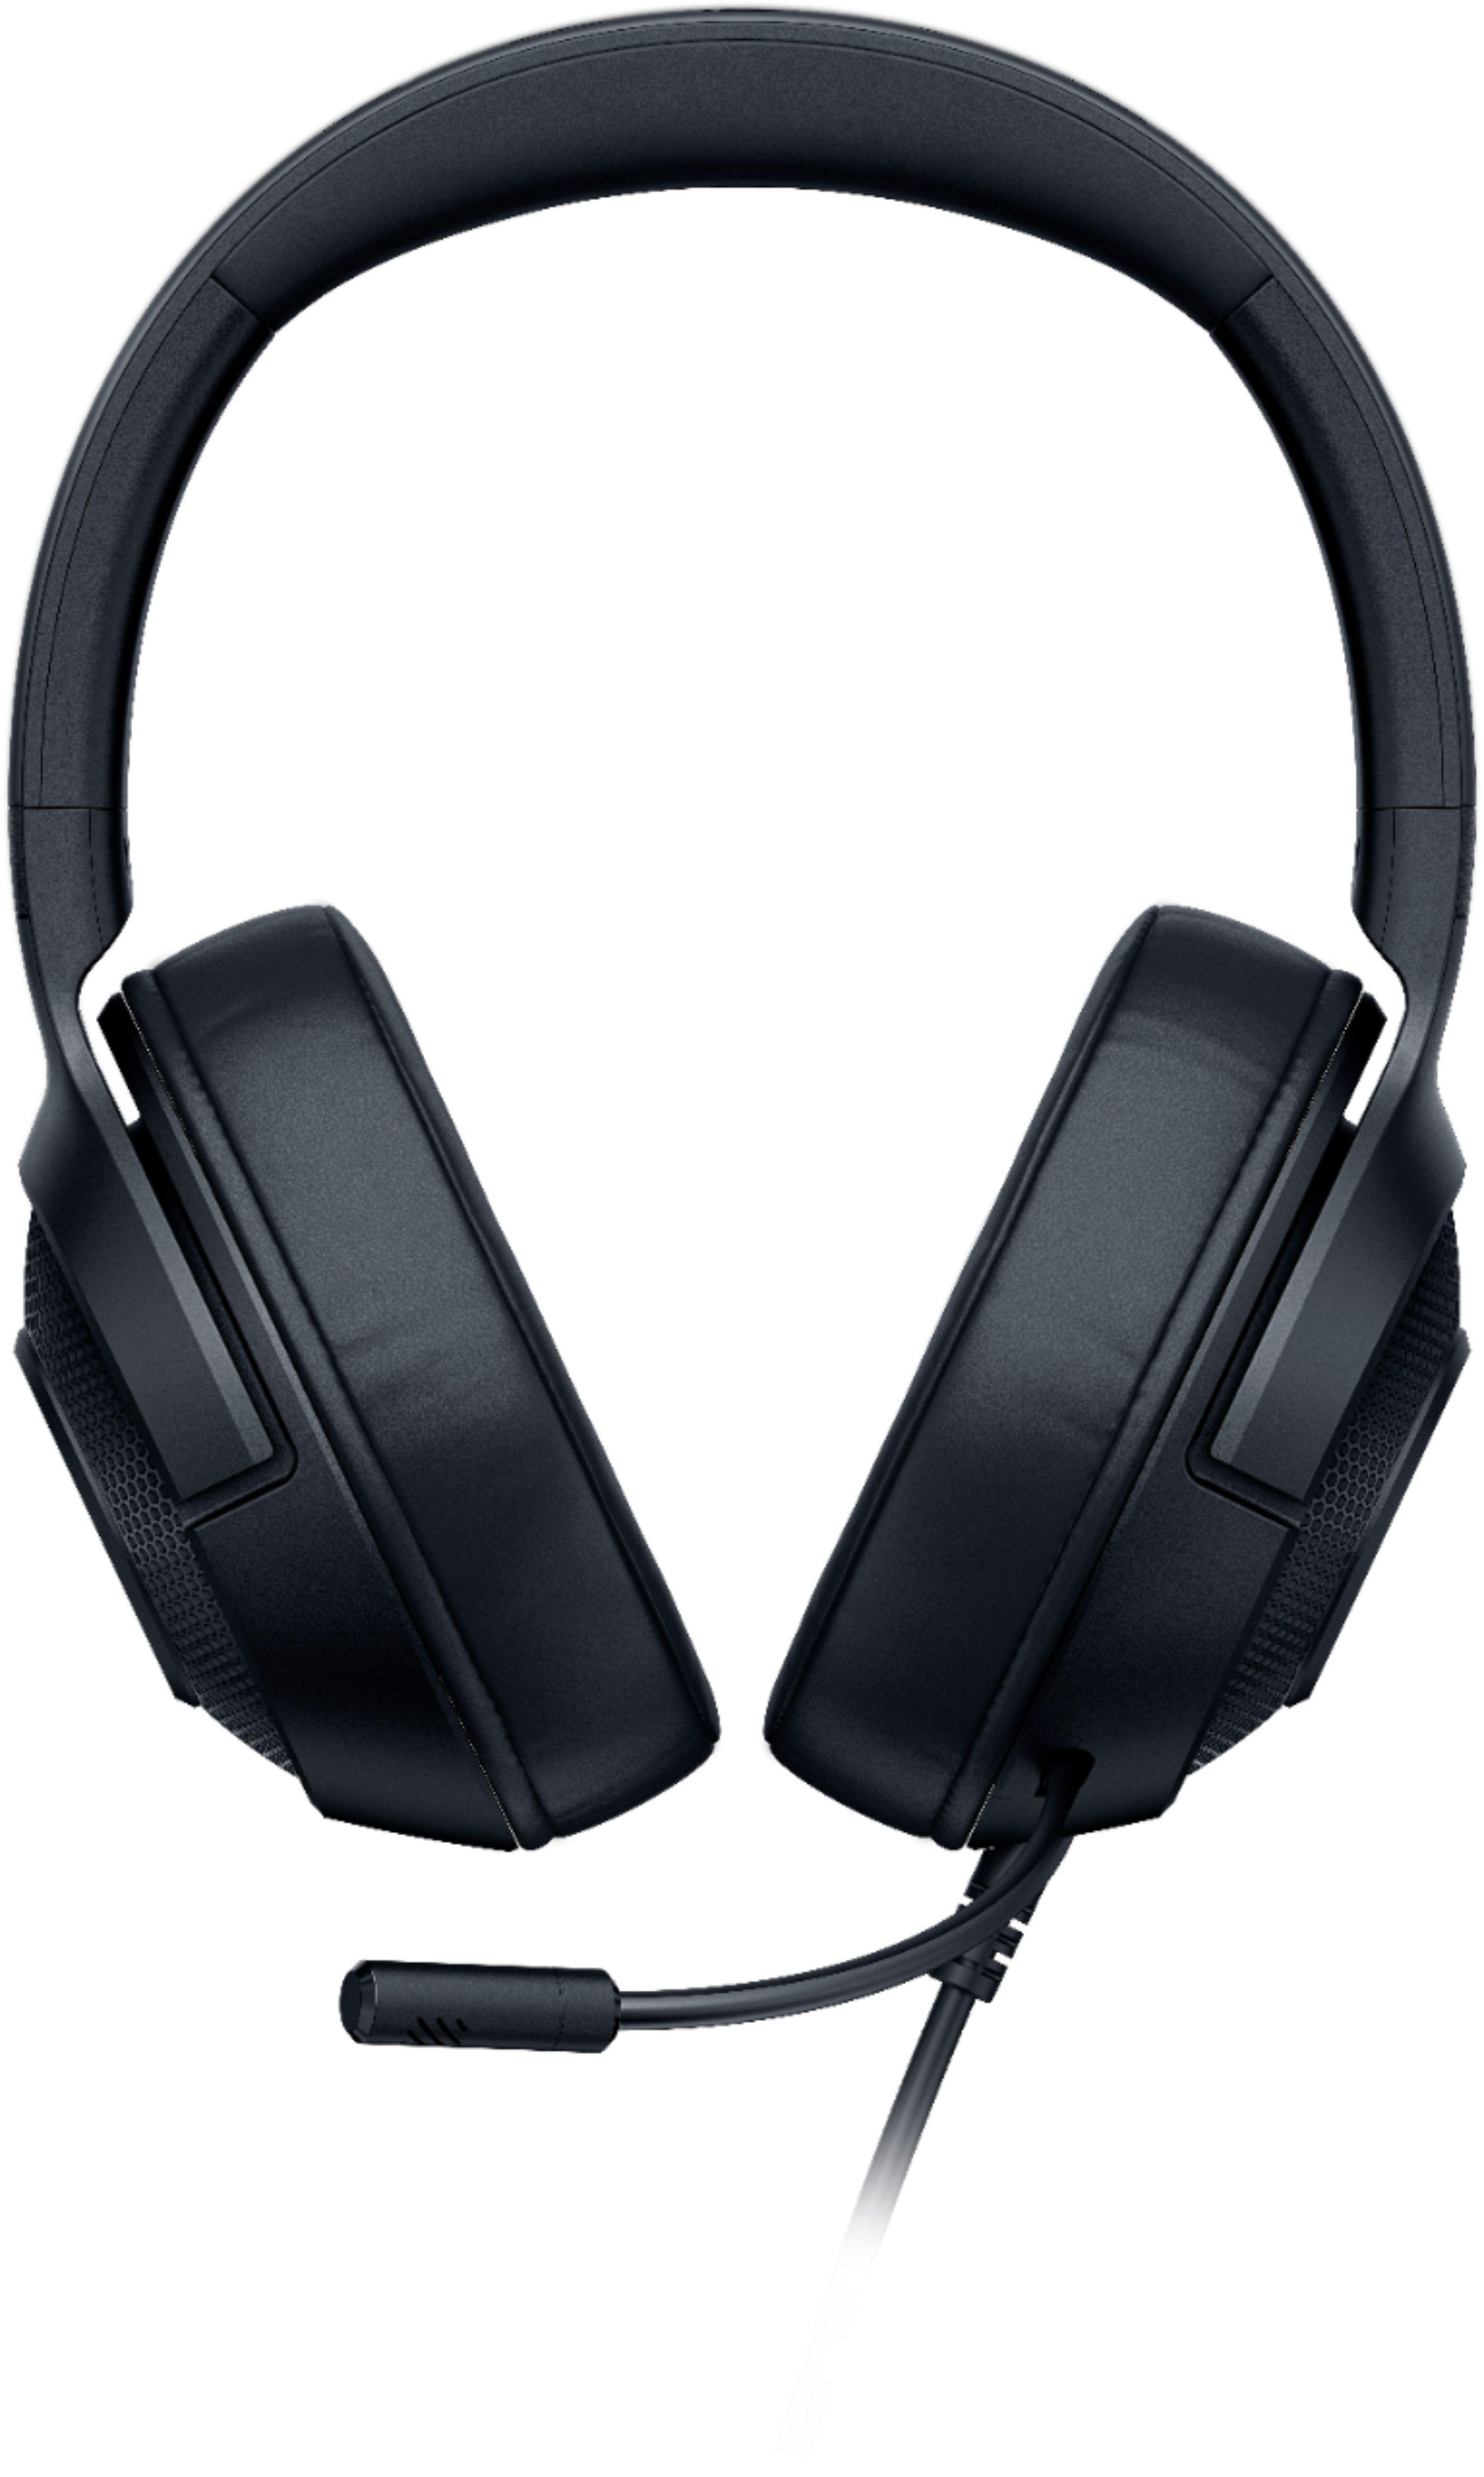 Razer Kraken X - Gaming Headset (Ultralight Gaming Headset for PC, Mac,  Xbox One, PS4 and Switch, Headband Padding, 7.1 Surround Sound) Black